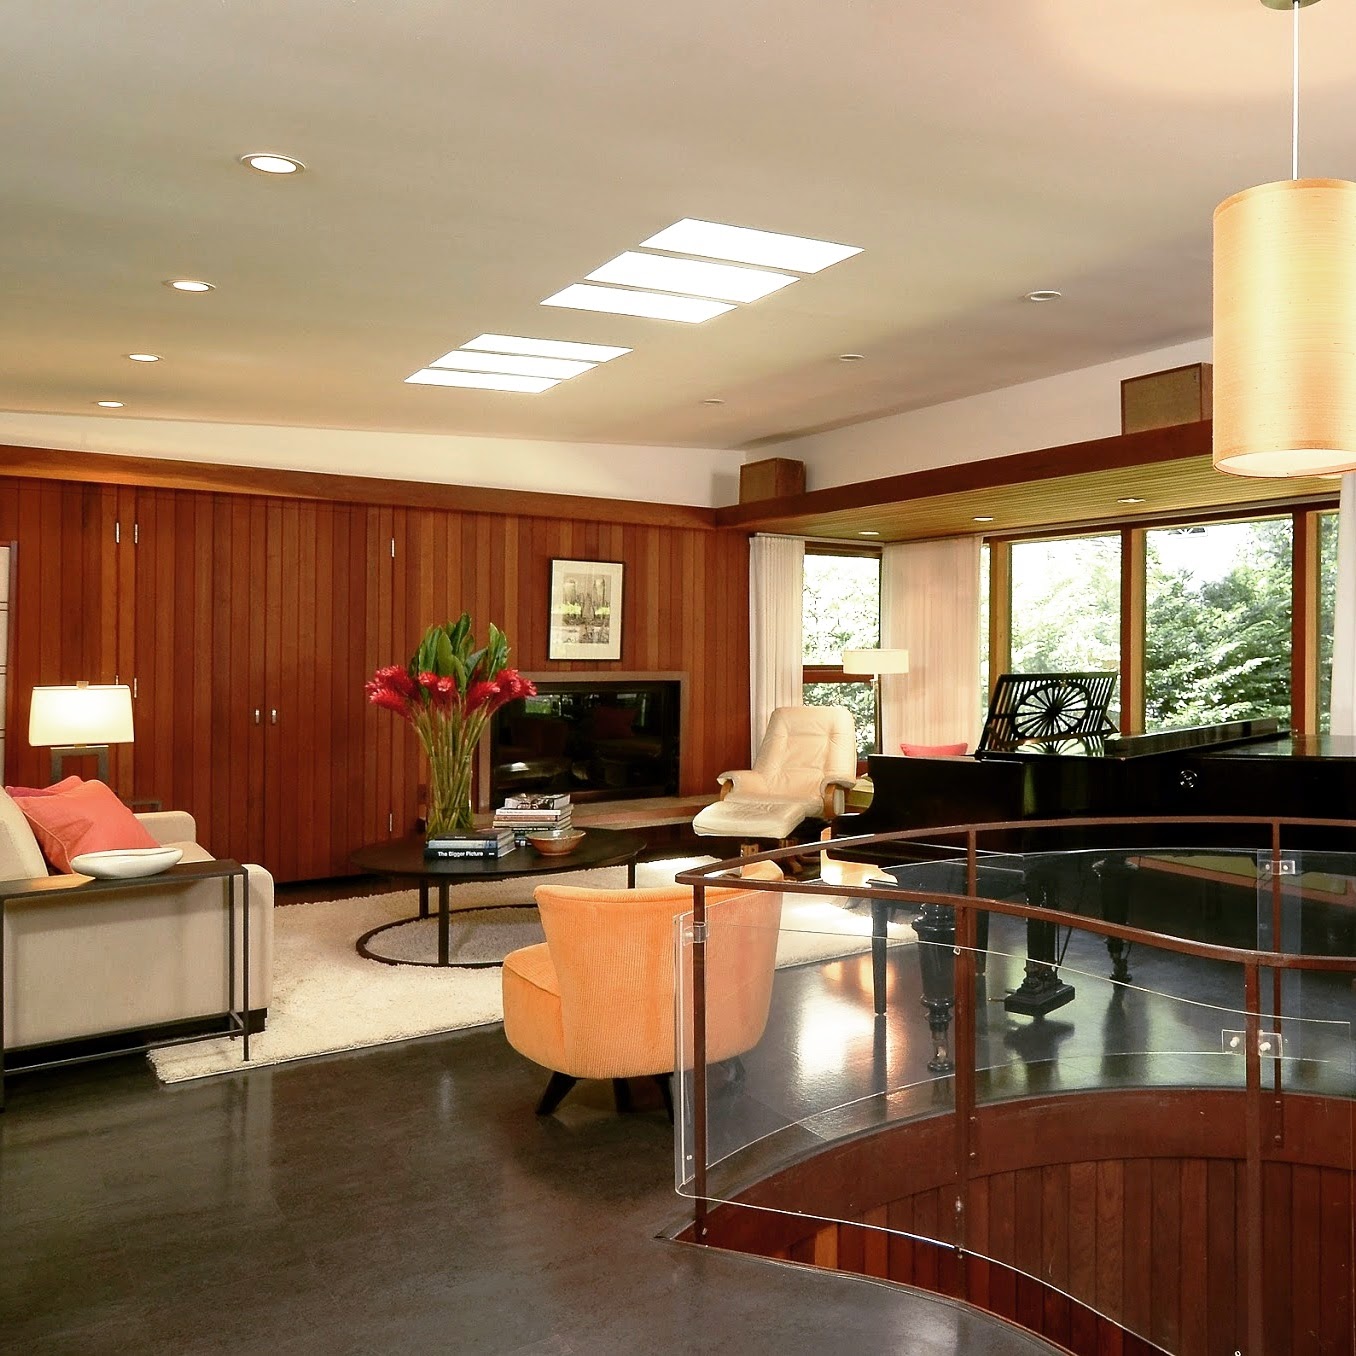 Winston Close and Elizabeth Scheu designed home - St. Paul, MN | Jay Nuhring | Home Stylist | Interior Designer